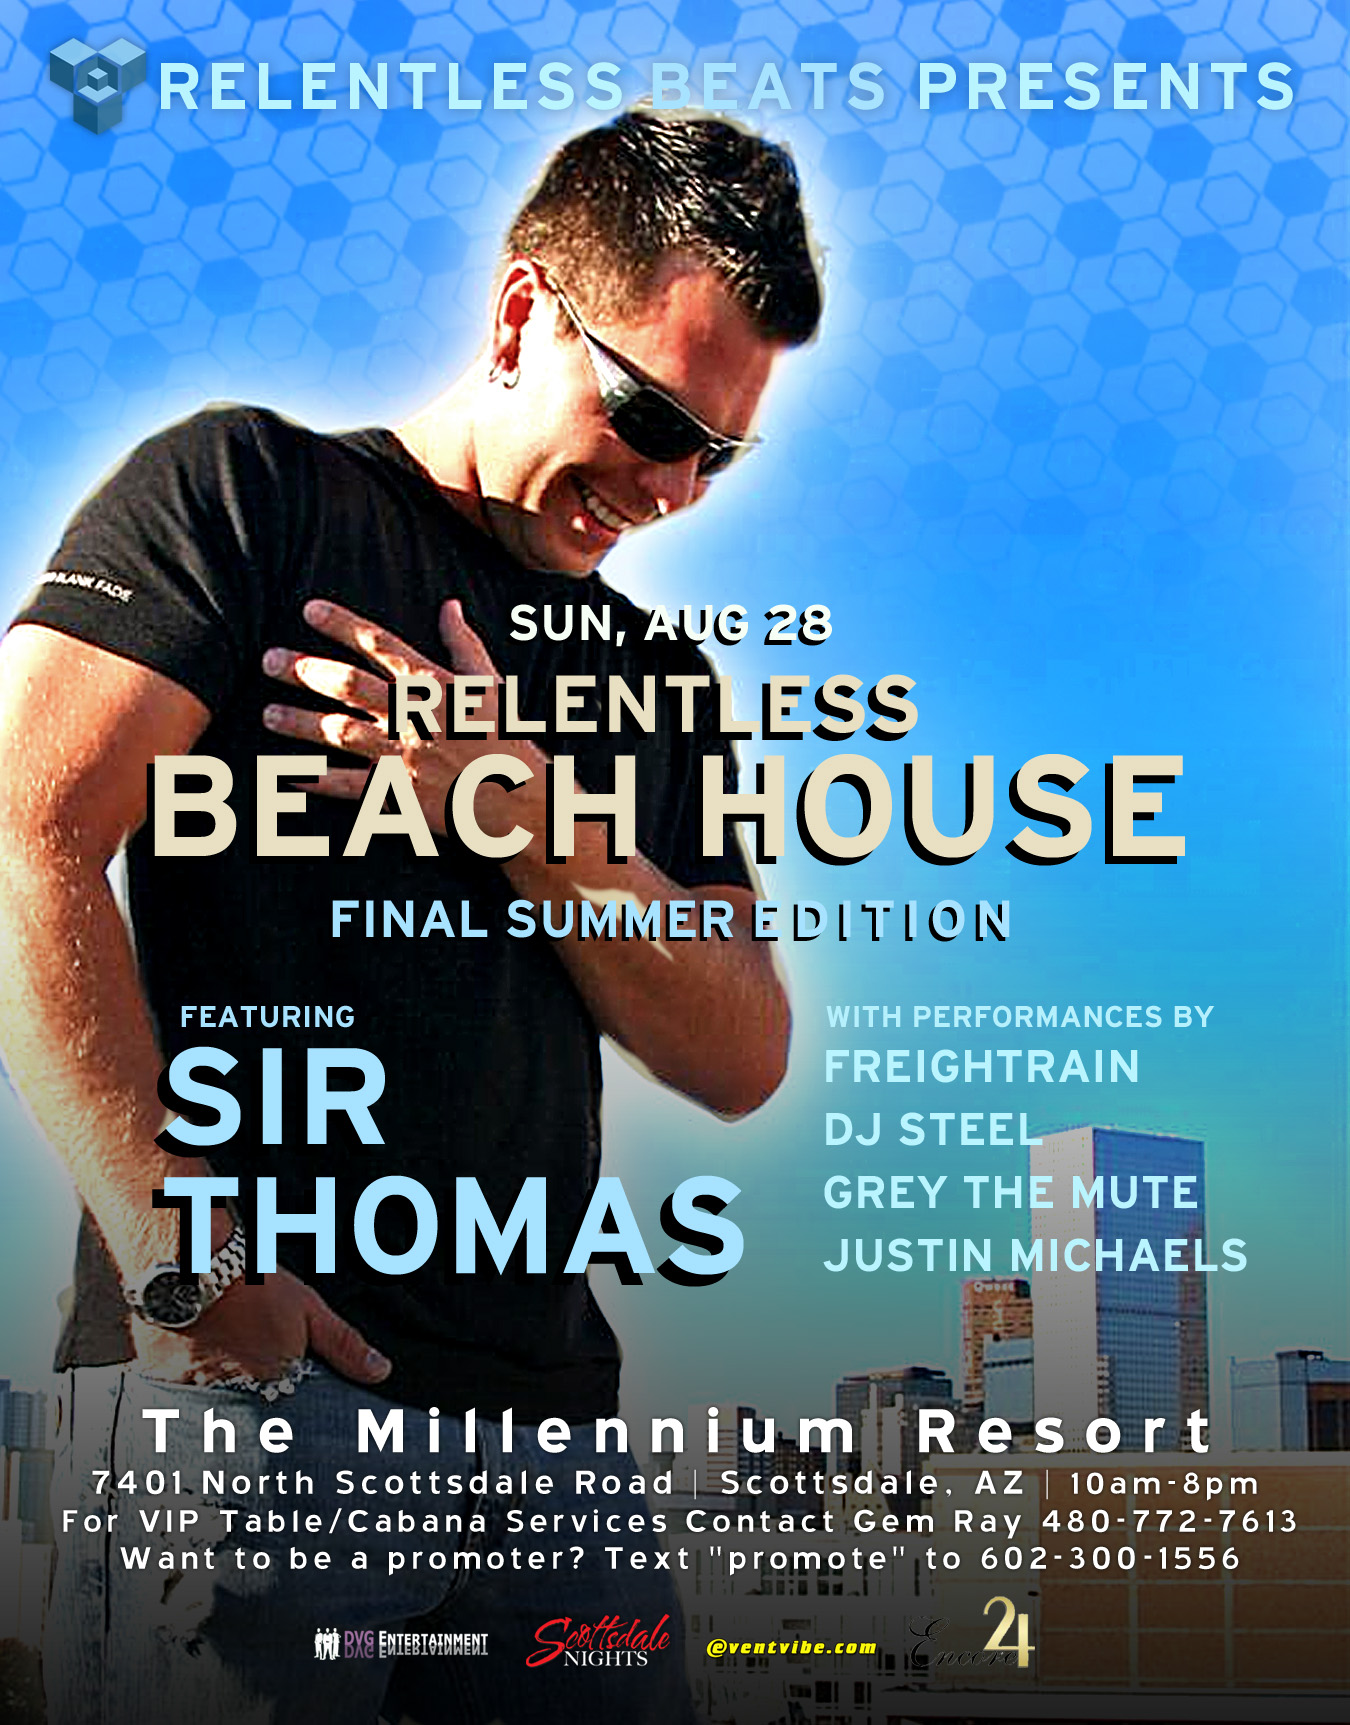 SIR THOMAS at Relentless Beach House on 08/28/11